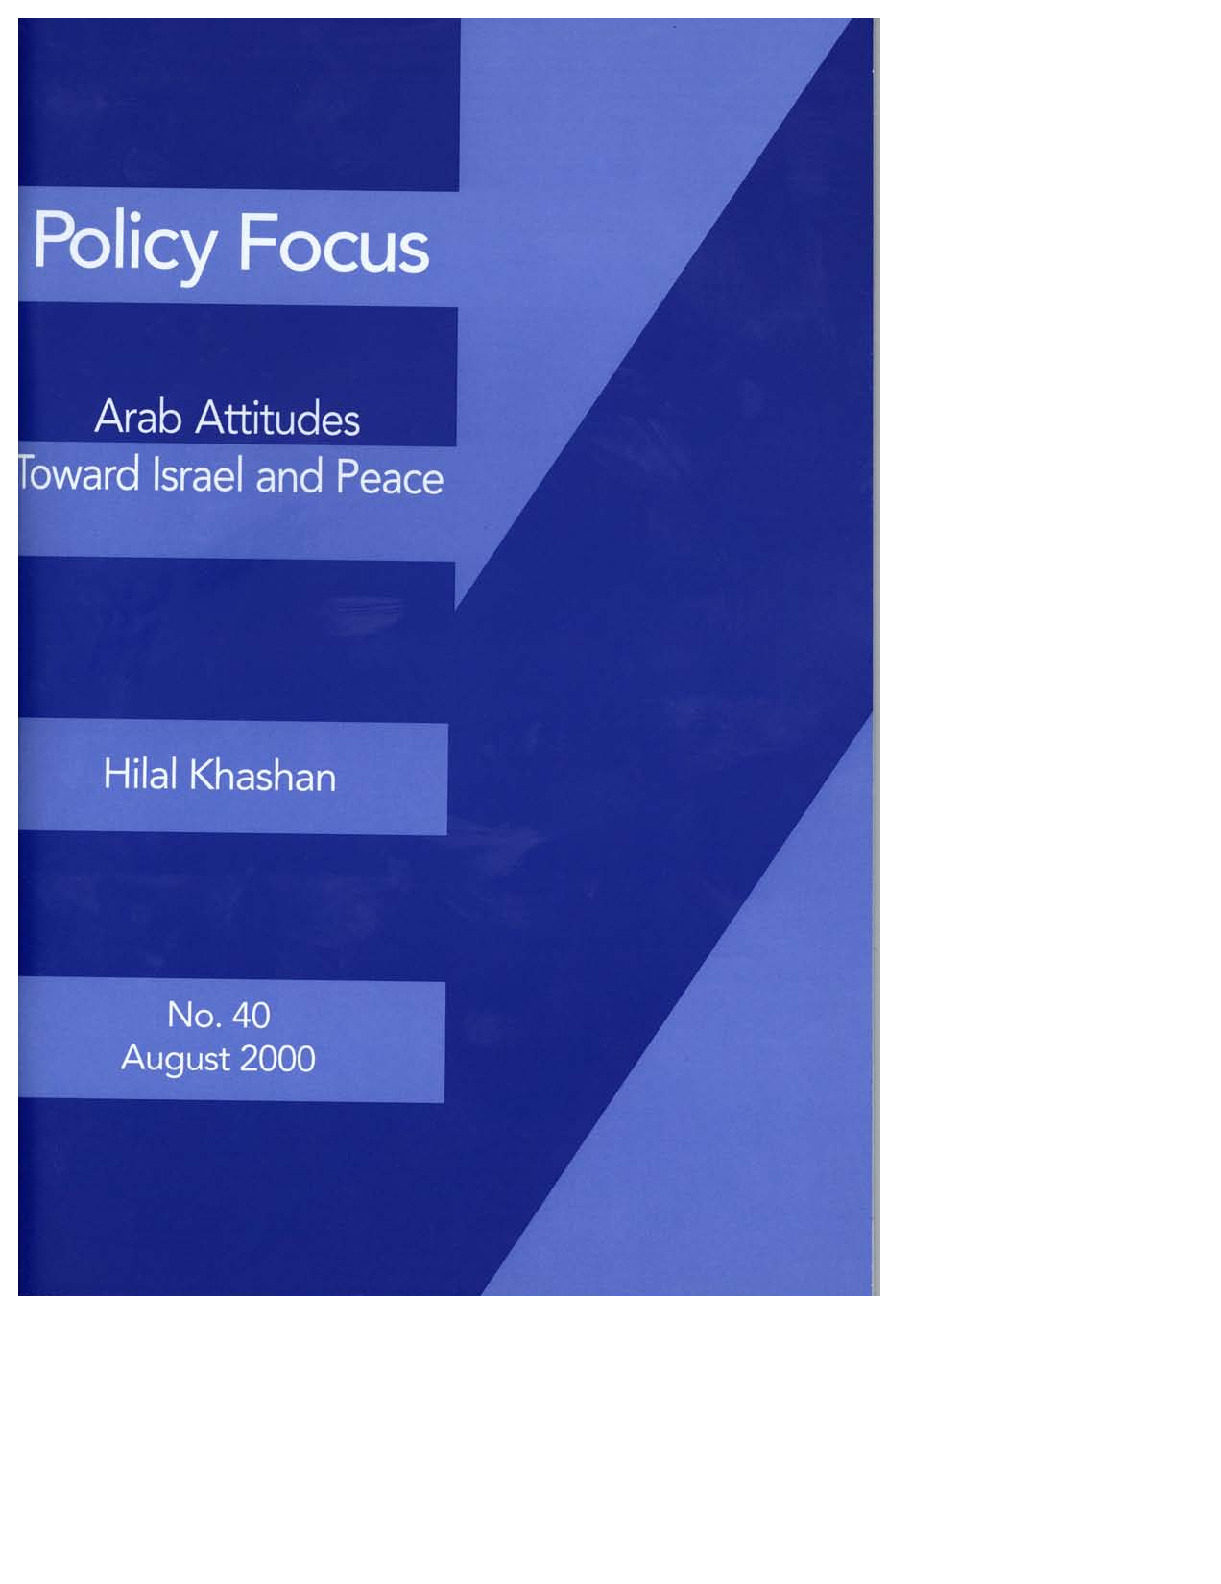 PolicyFocus40.pdf